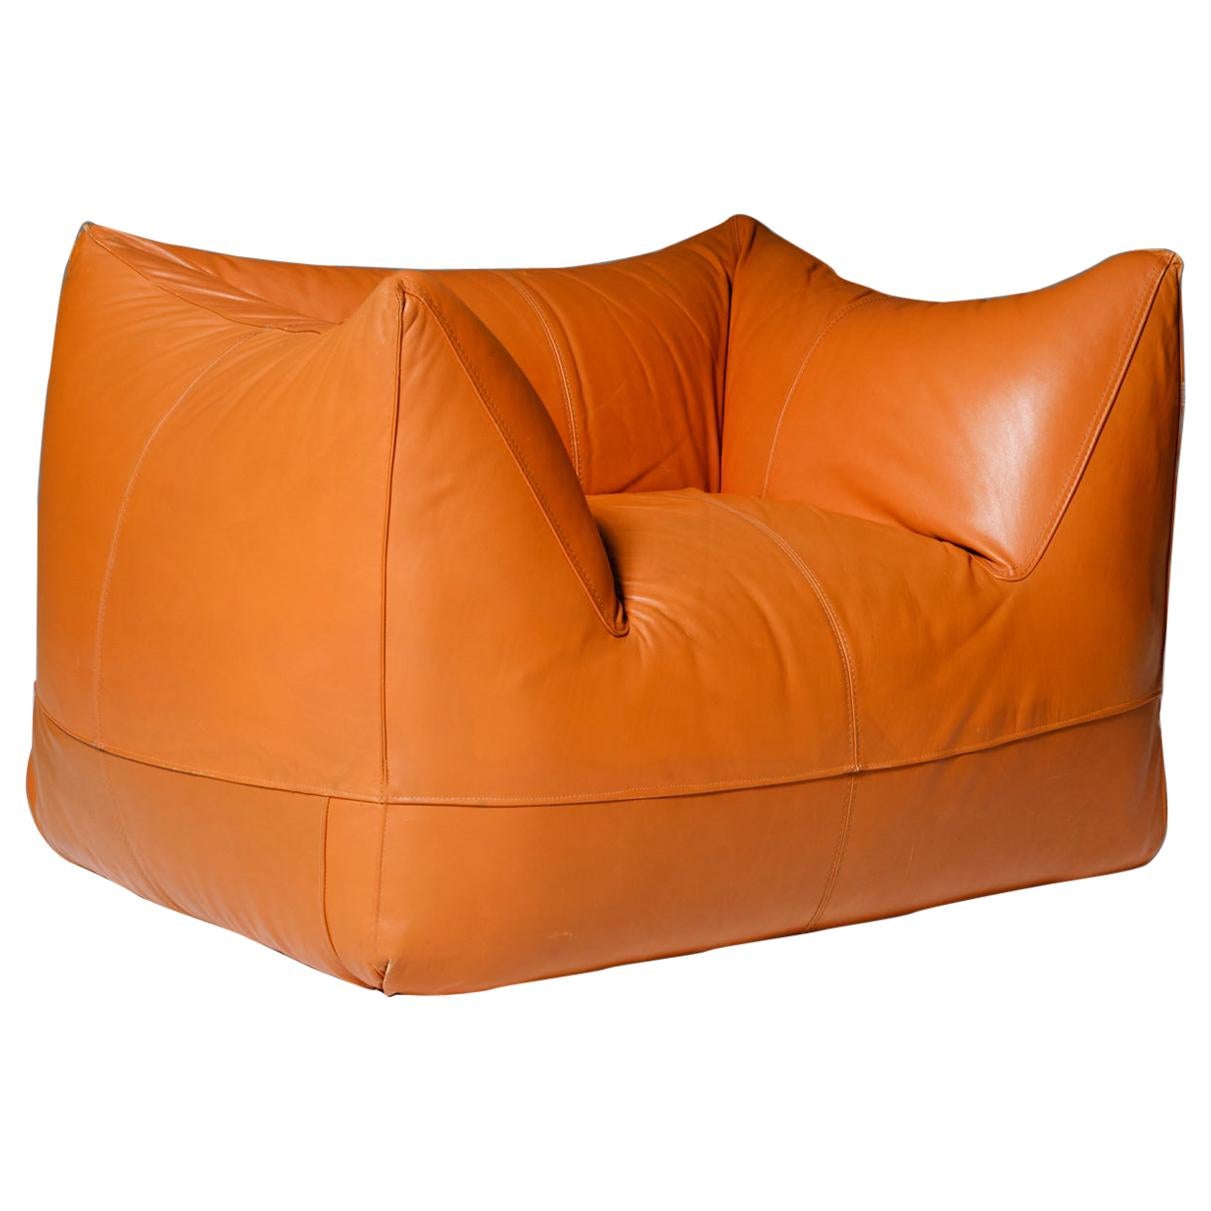 Mario Bellini ‘Le Bambole’ Lounge Chair in Original Cognac Leather